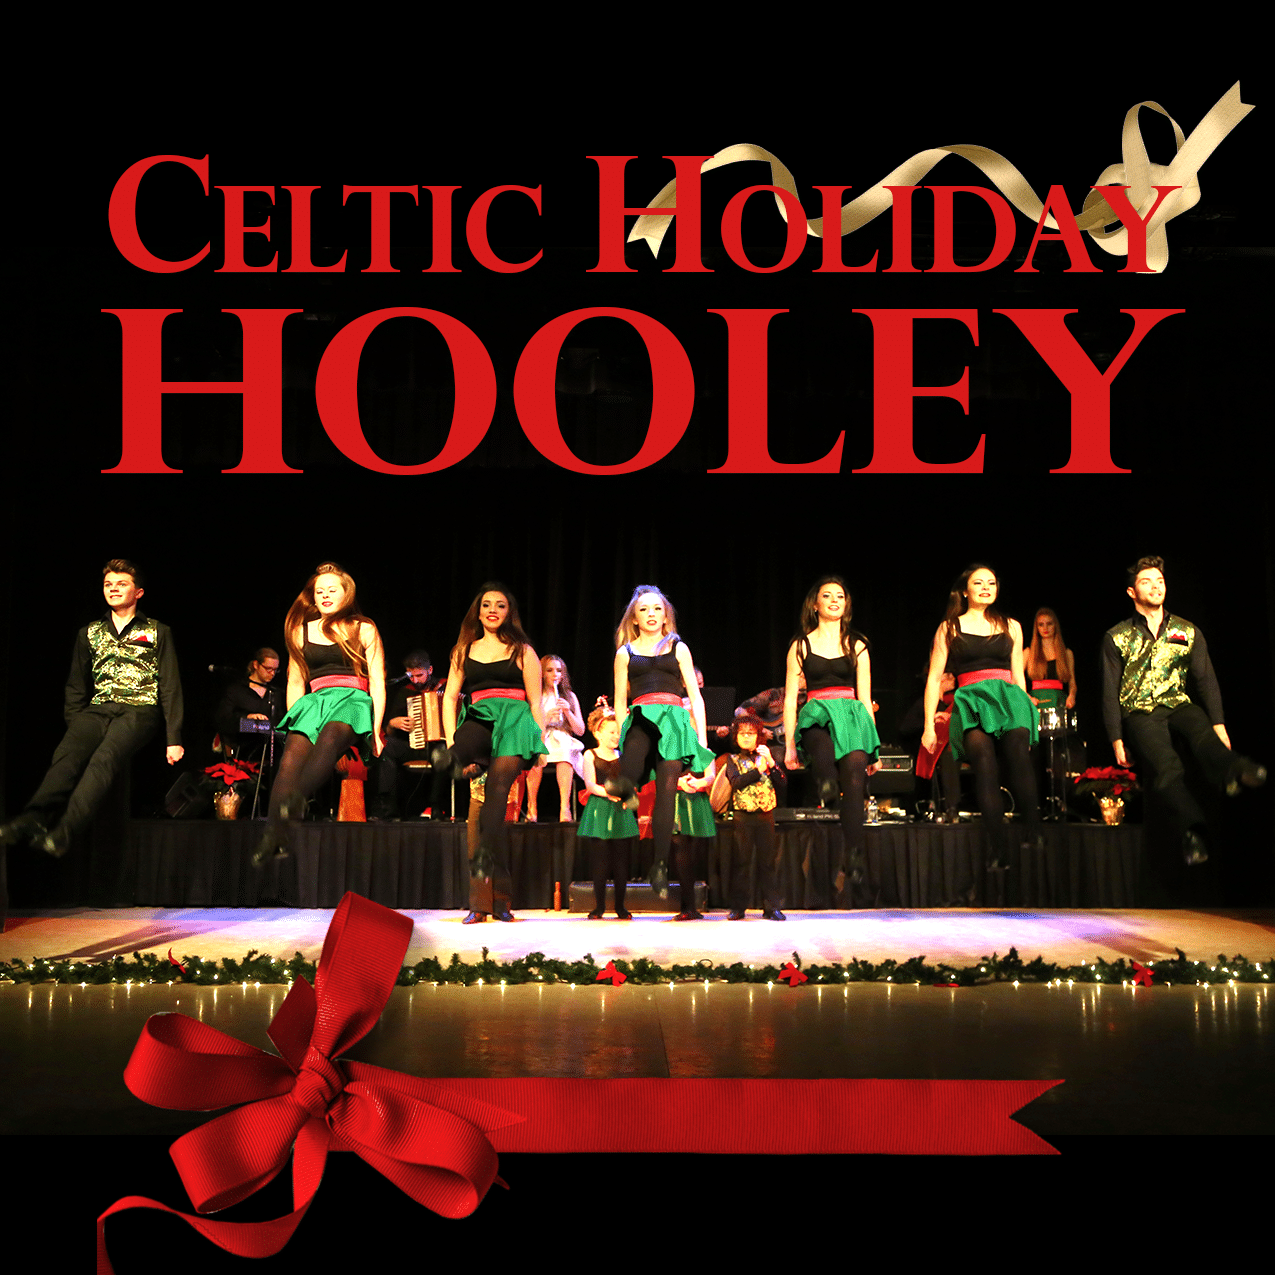 Celtic Holiday Hooley Celtic Junction Arts Center